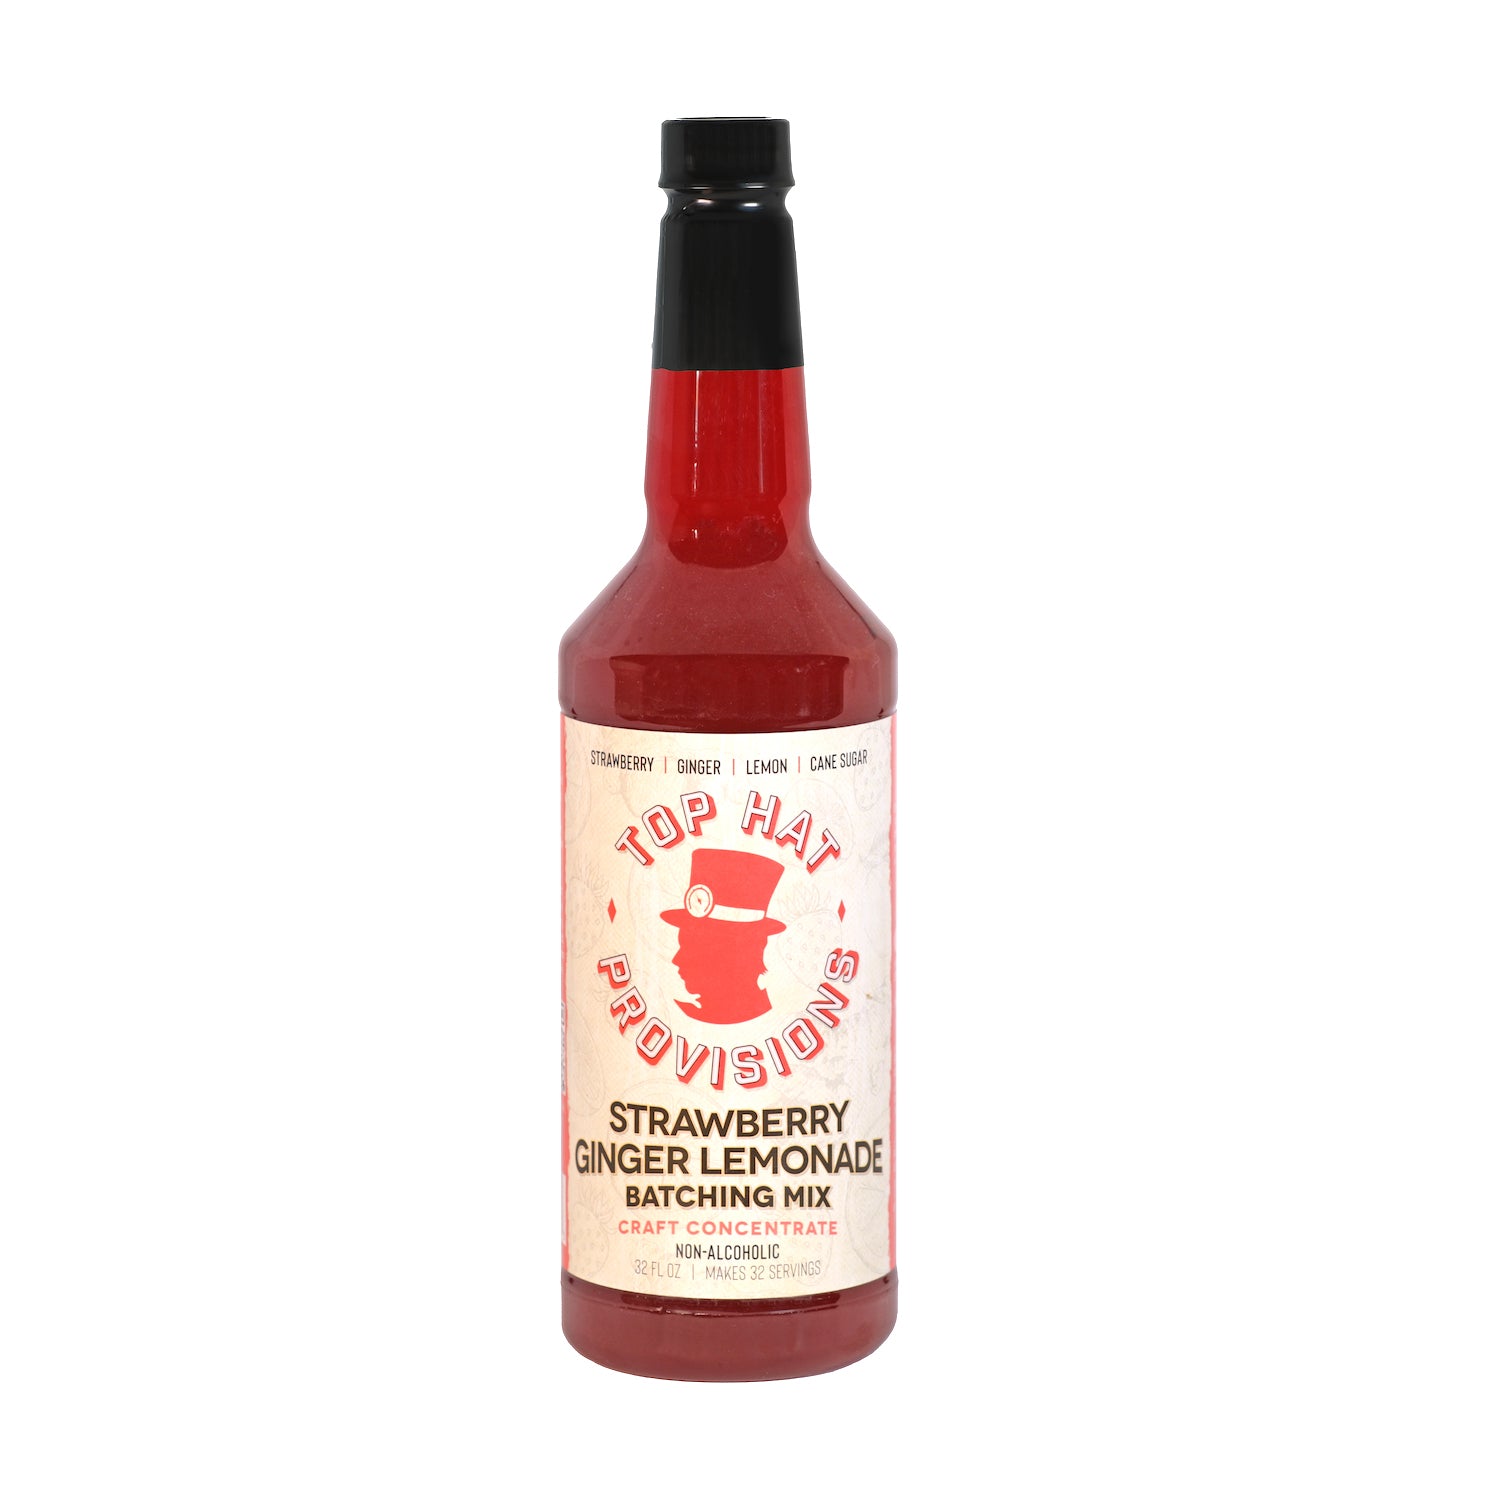 Top Hat Strawberry Ginger Lemonade Concentrate & Batching Mix - 32oz Bottle